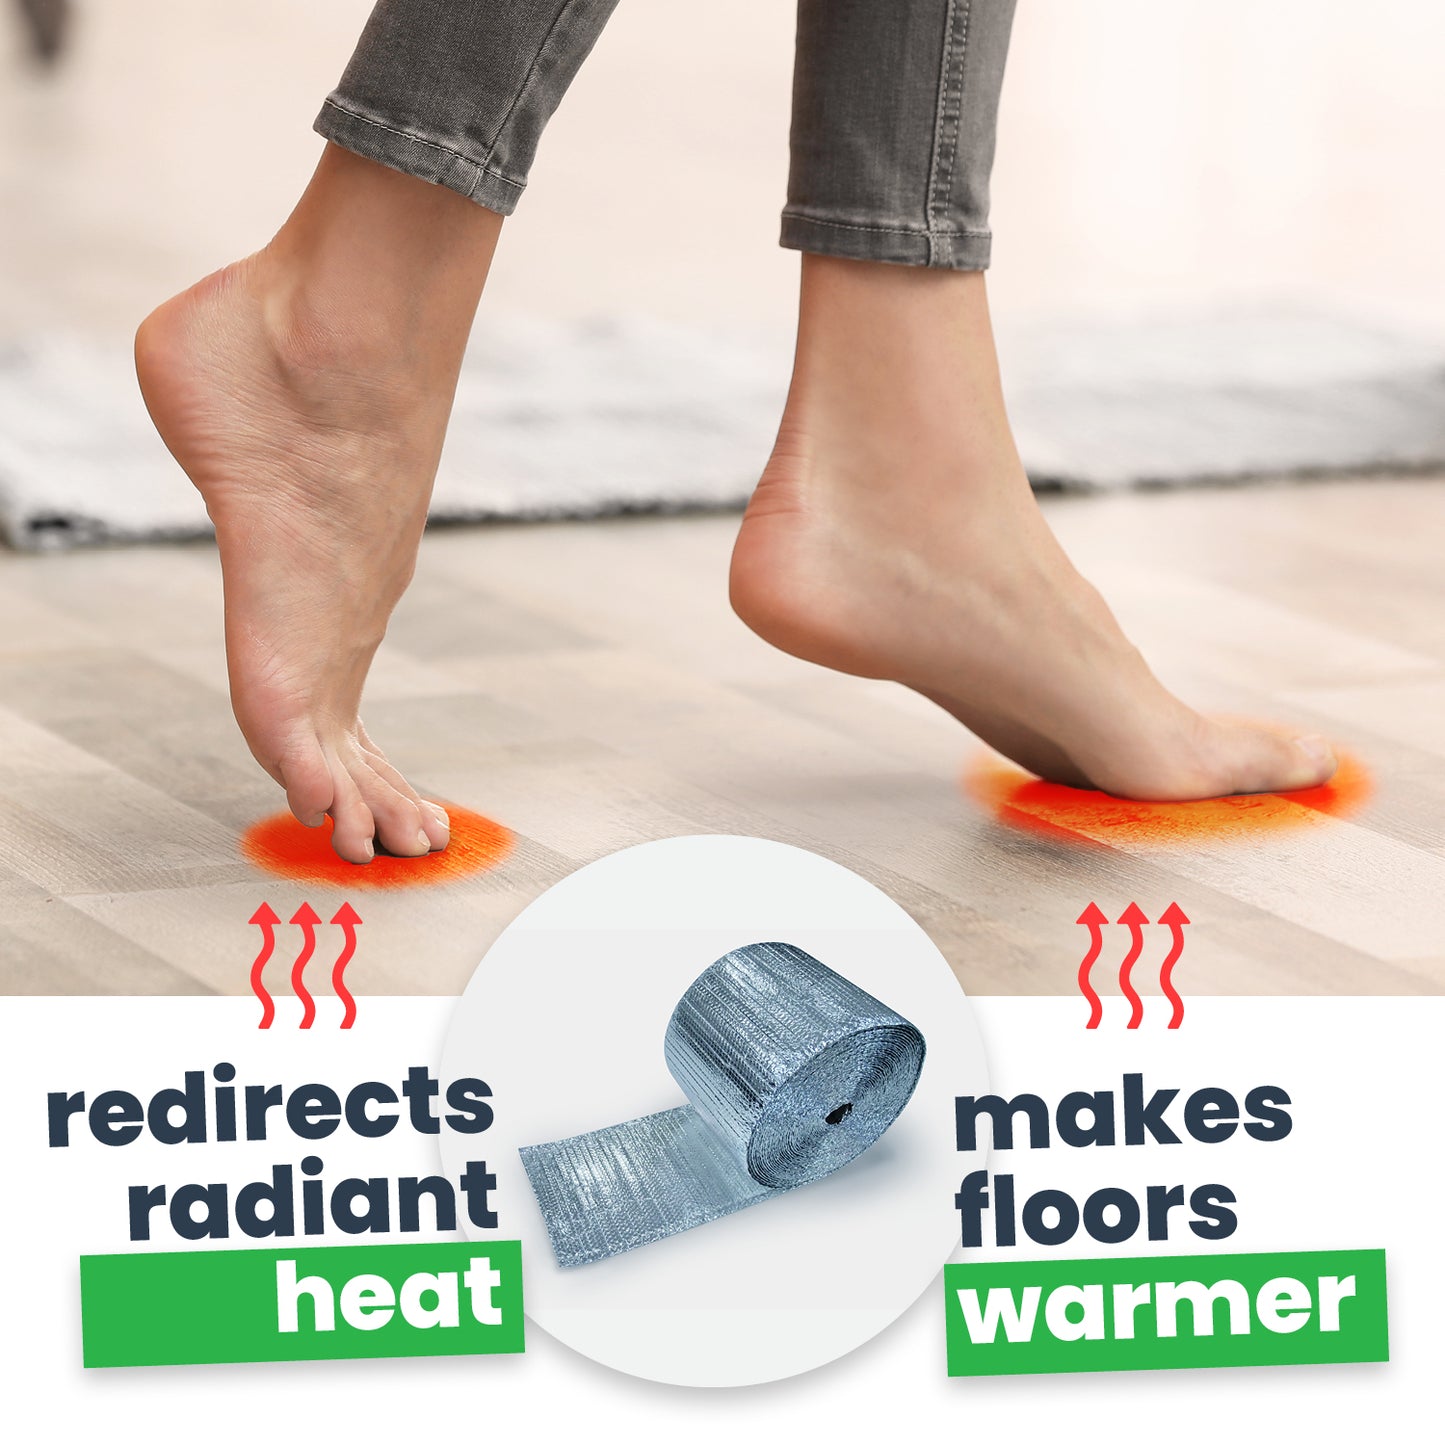 Floor joist insulation redirects radiant heat, make floors warmer